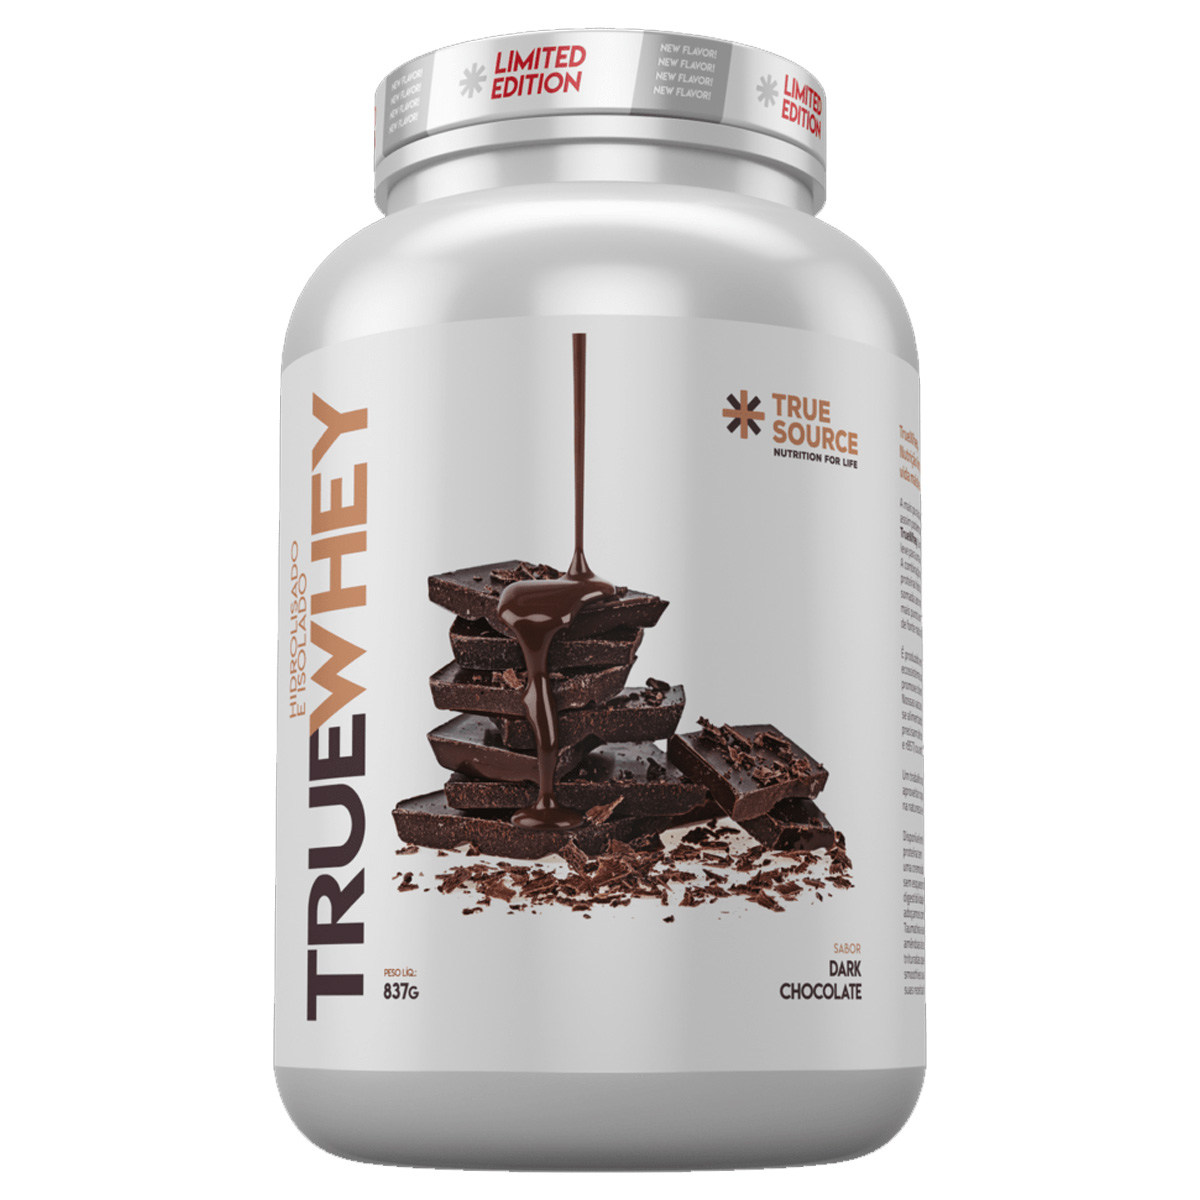 Proteína Vegana Sachê Chocolate c/ Avelã 34g - Truesource